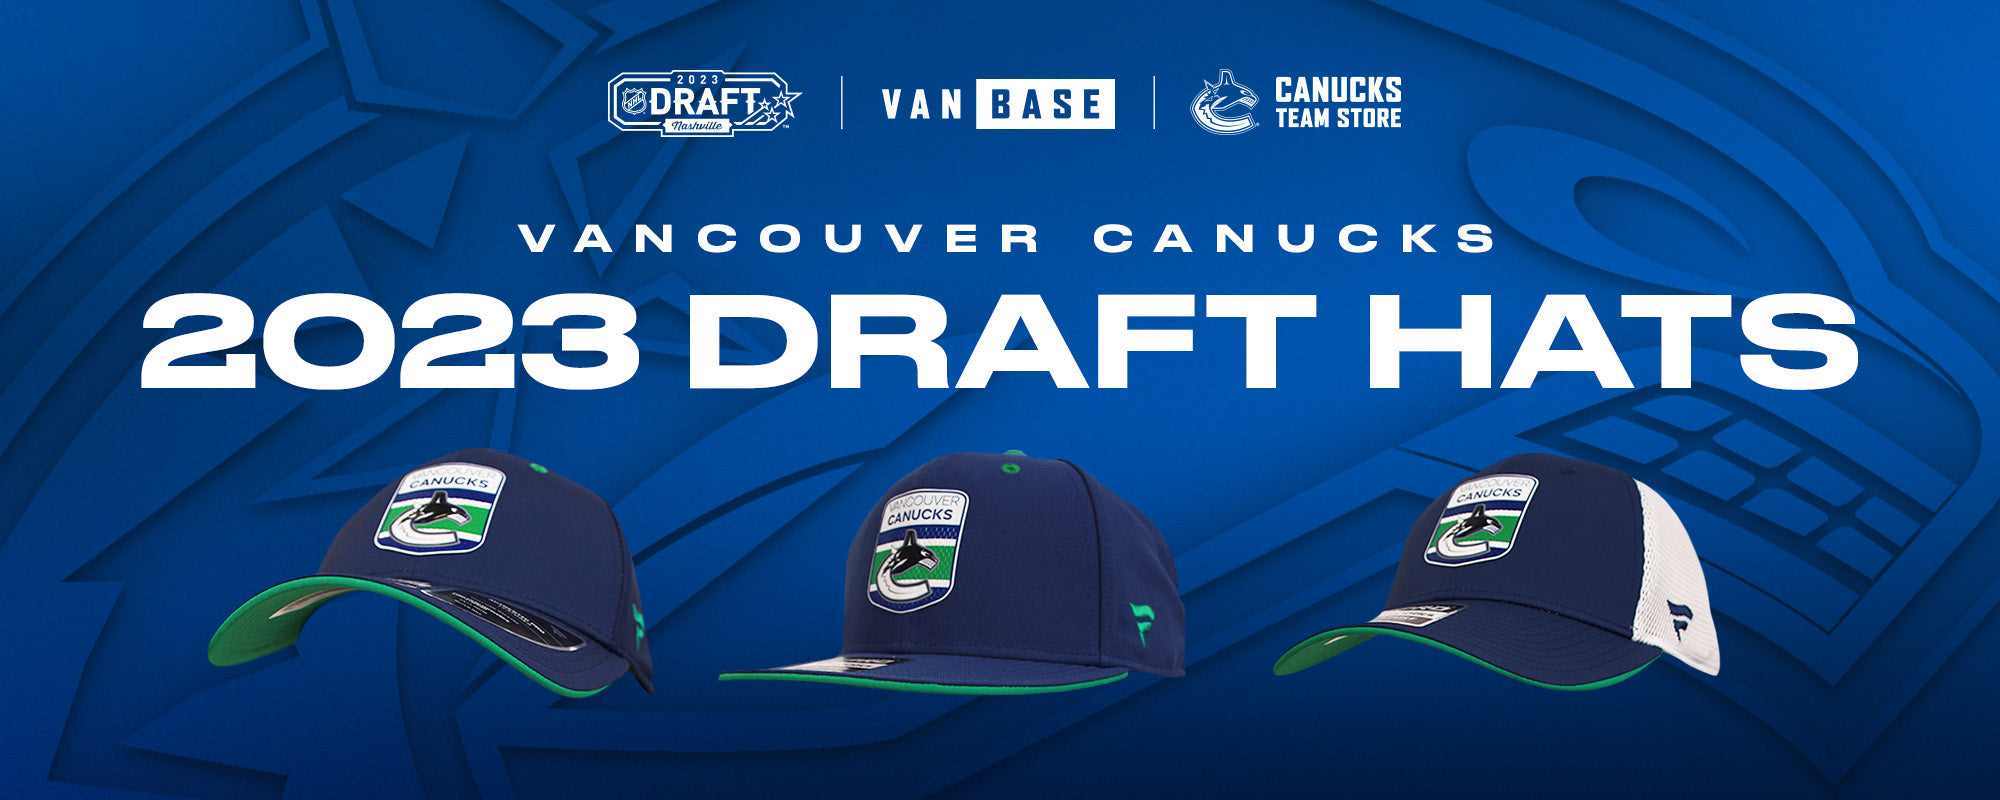 2023 Draft Hats